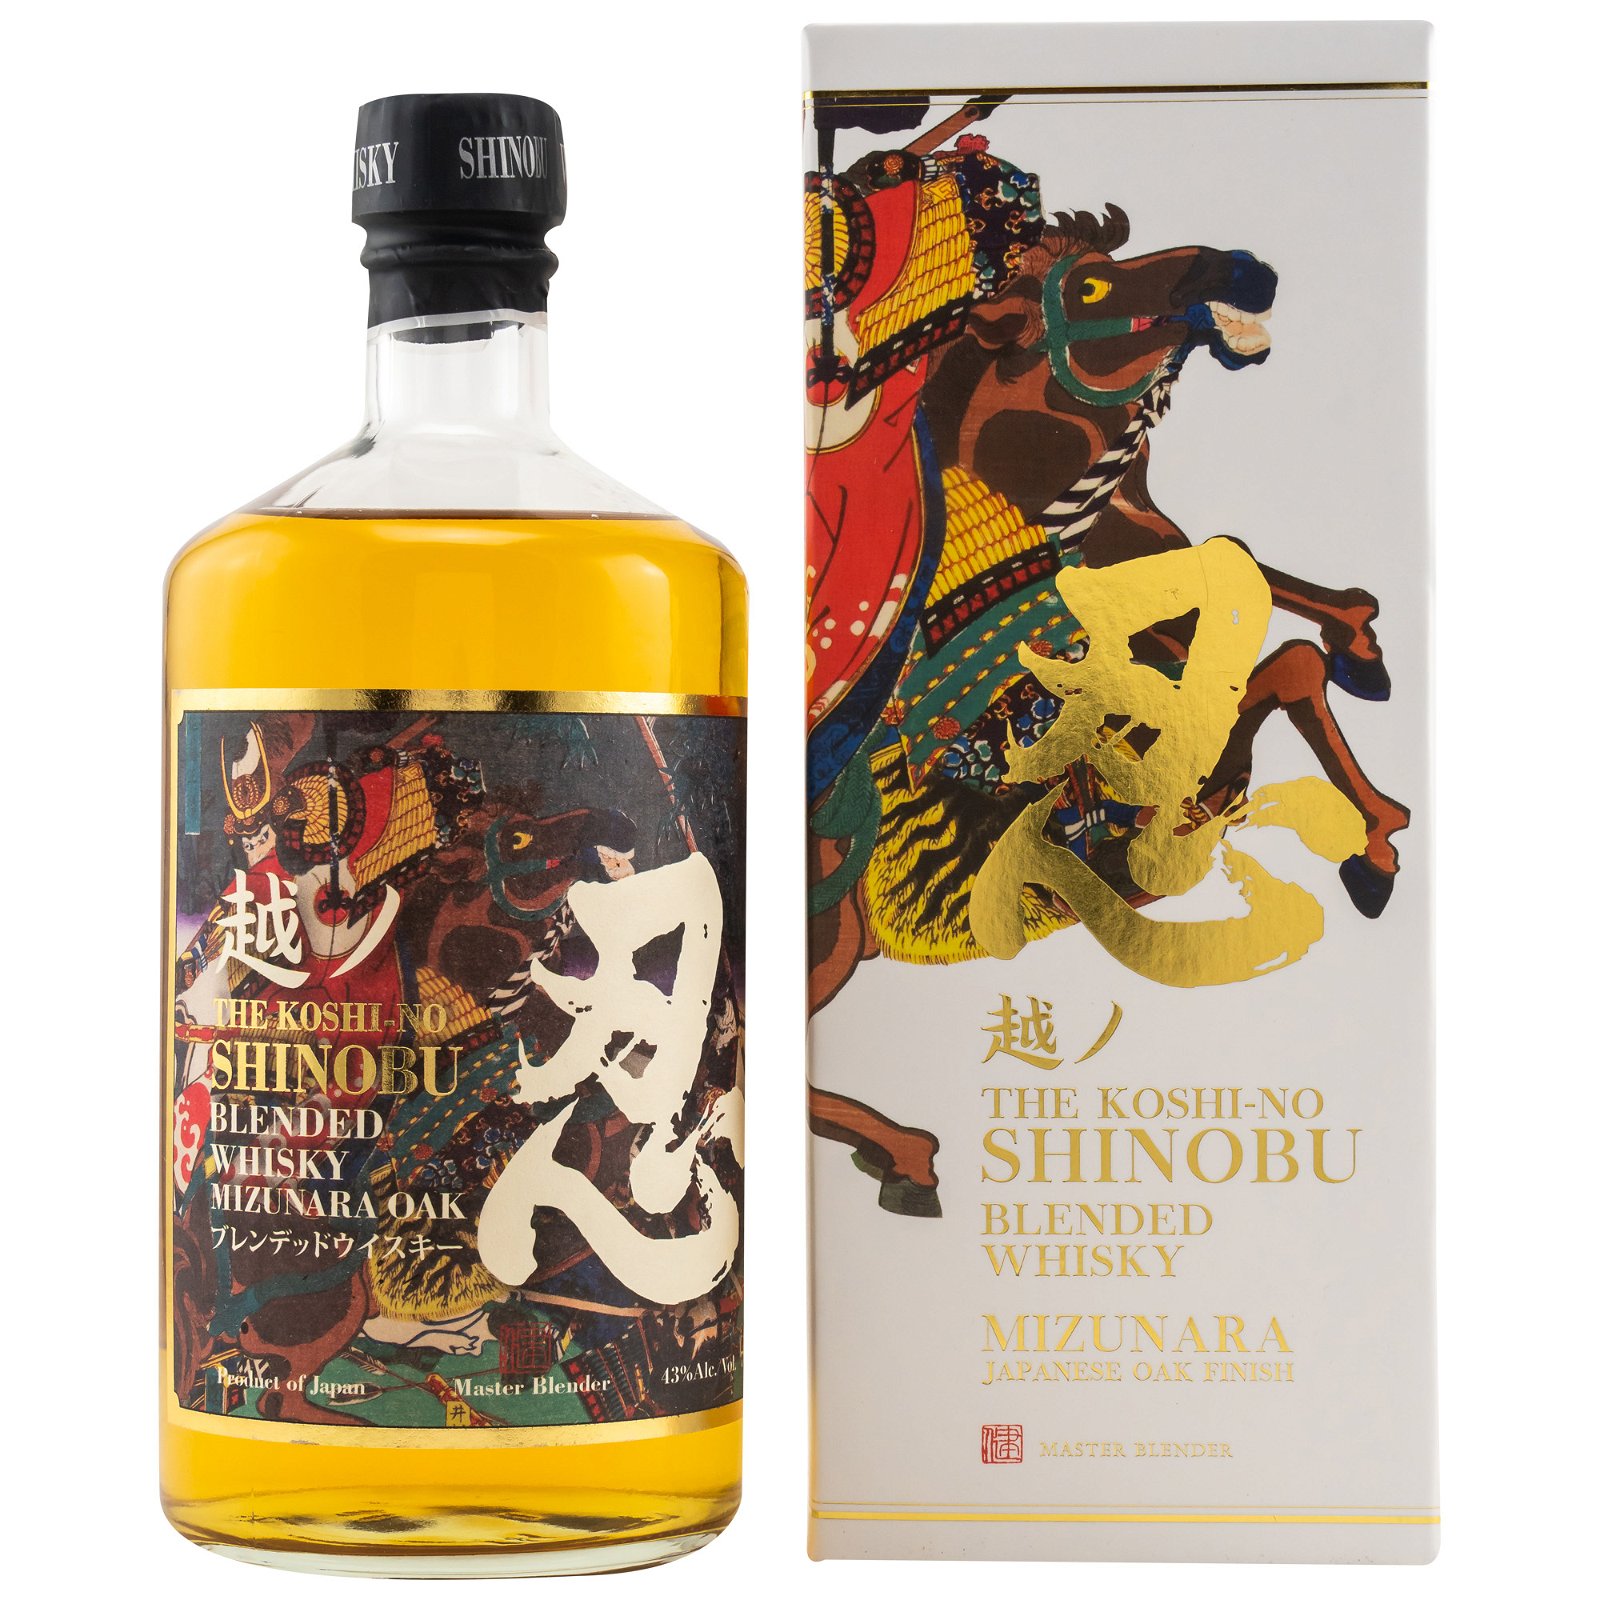 Shinobu Blended Whisky Mizunara Oak